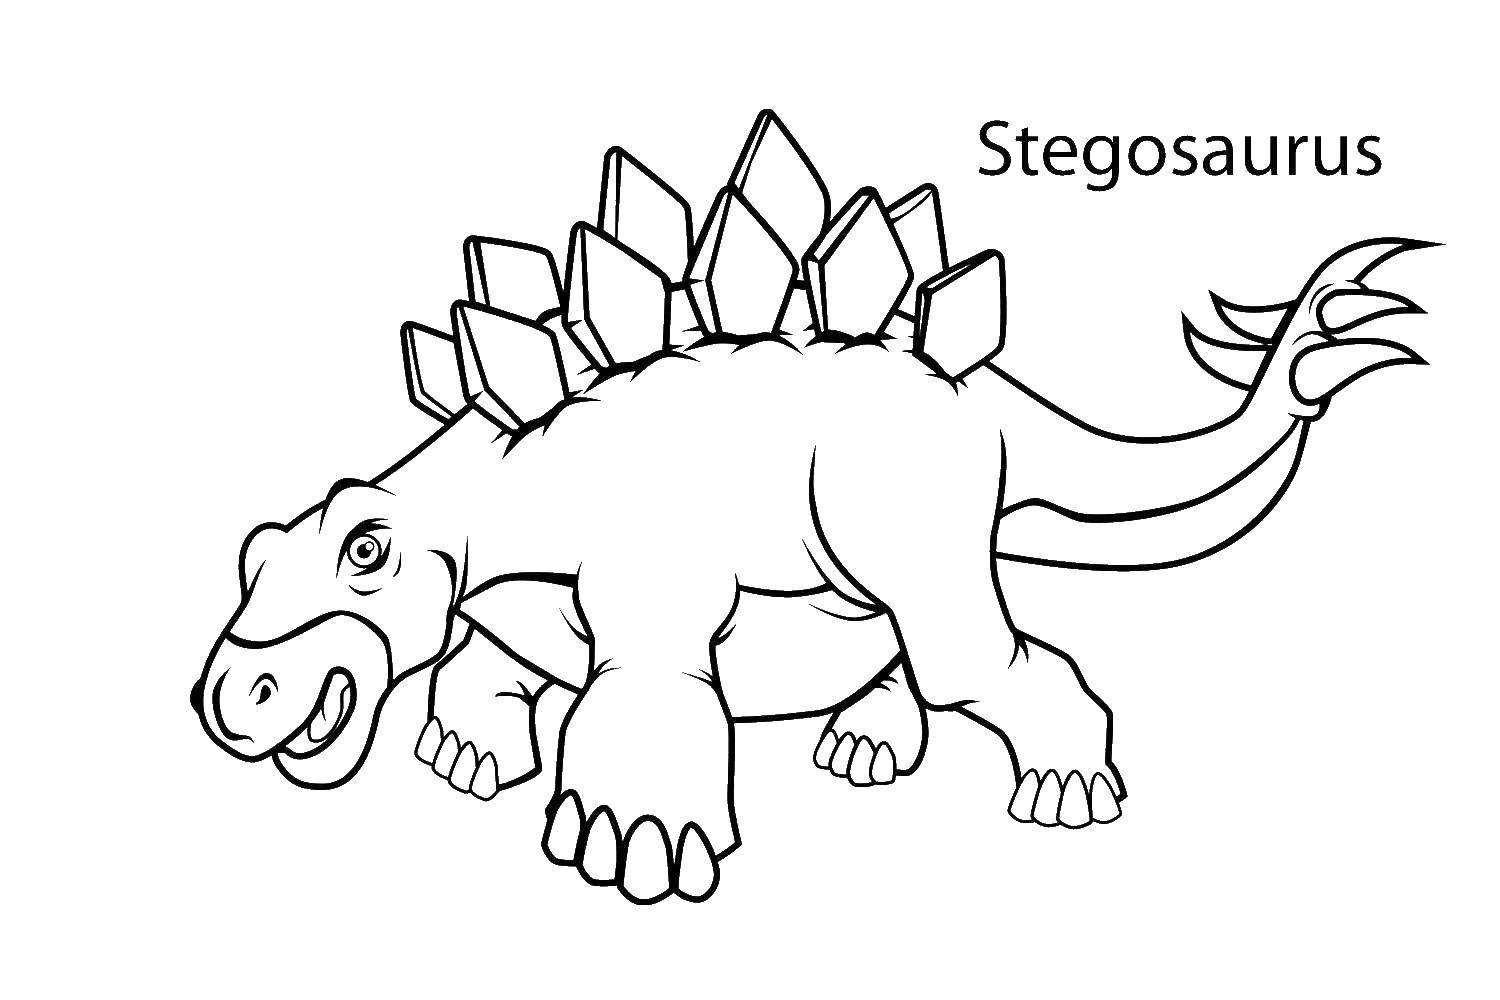 Coloring Herbivorous stegosaurus. Category dinosaur. Tags:  Dinosaurs, Stegosaurus.